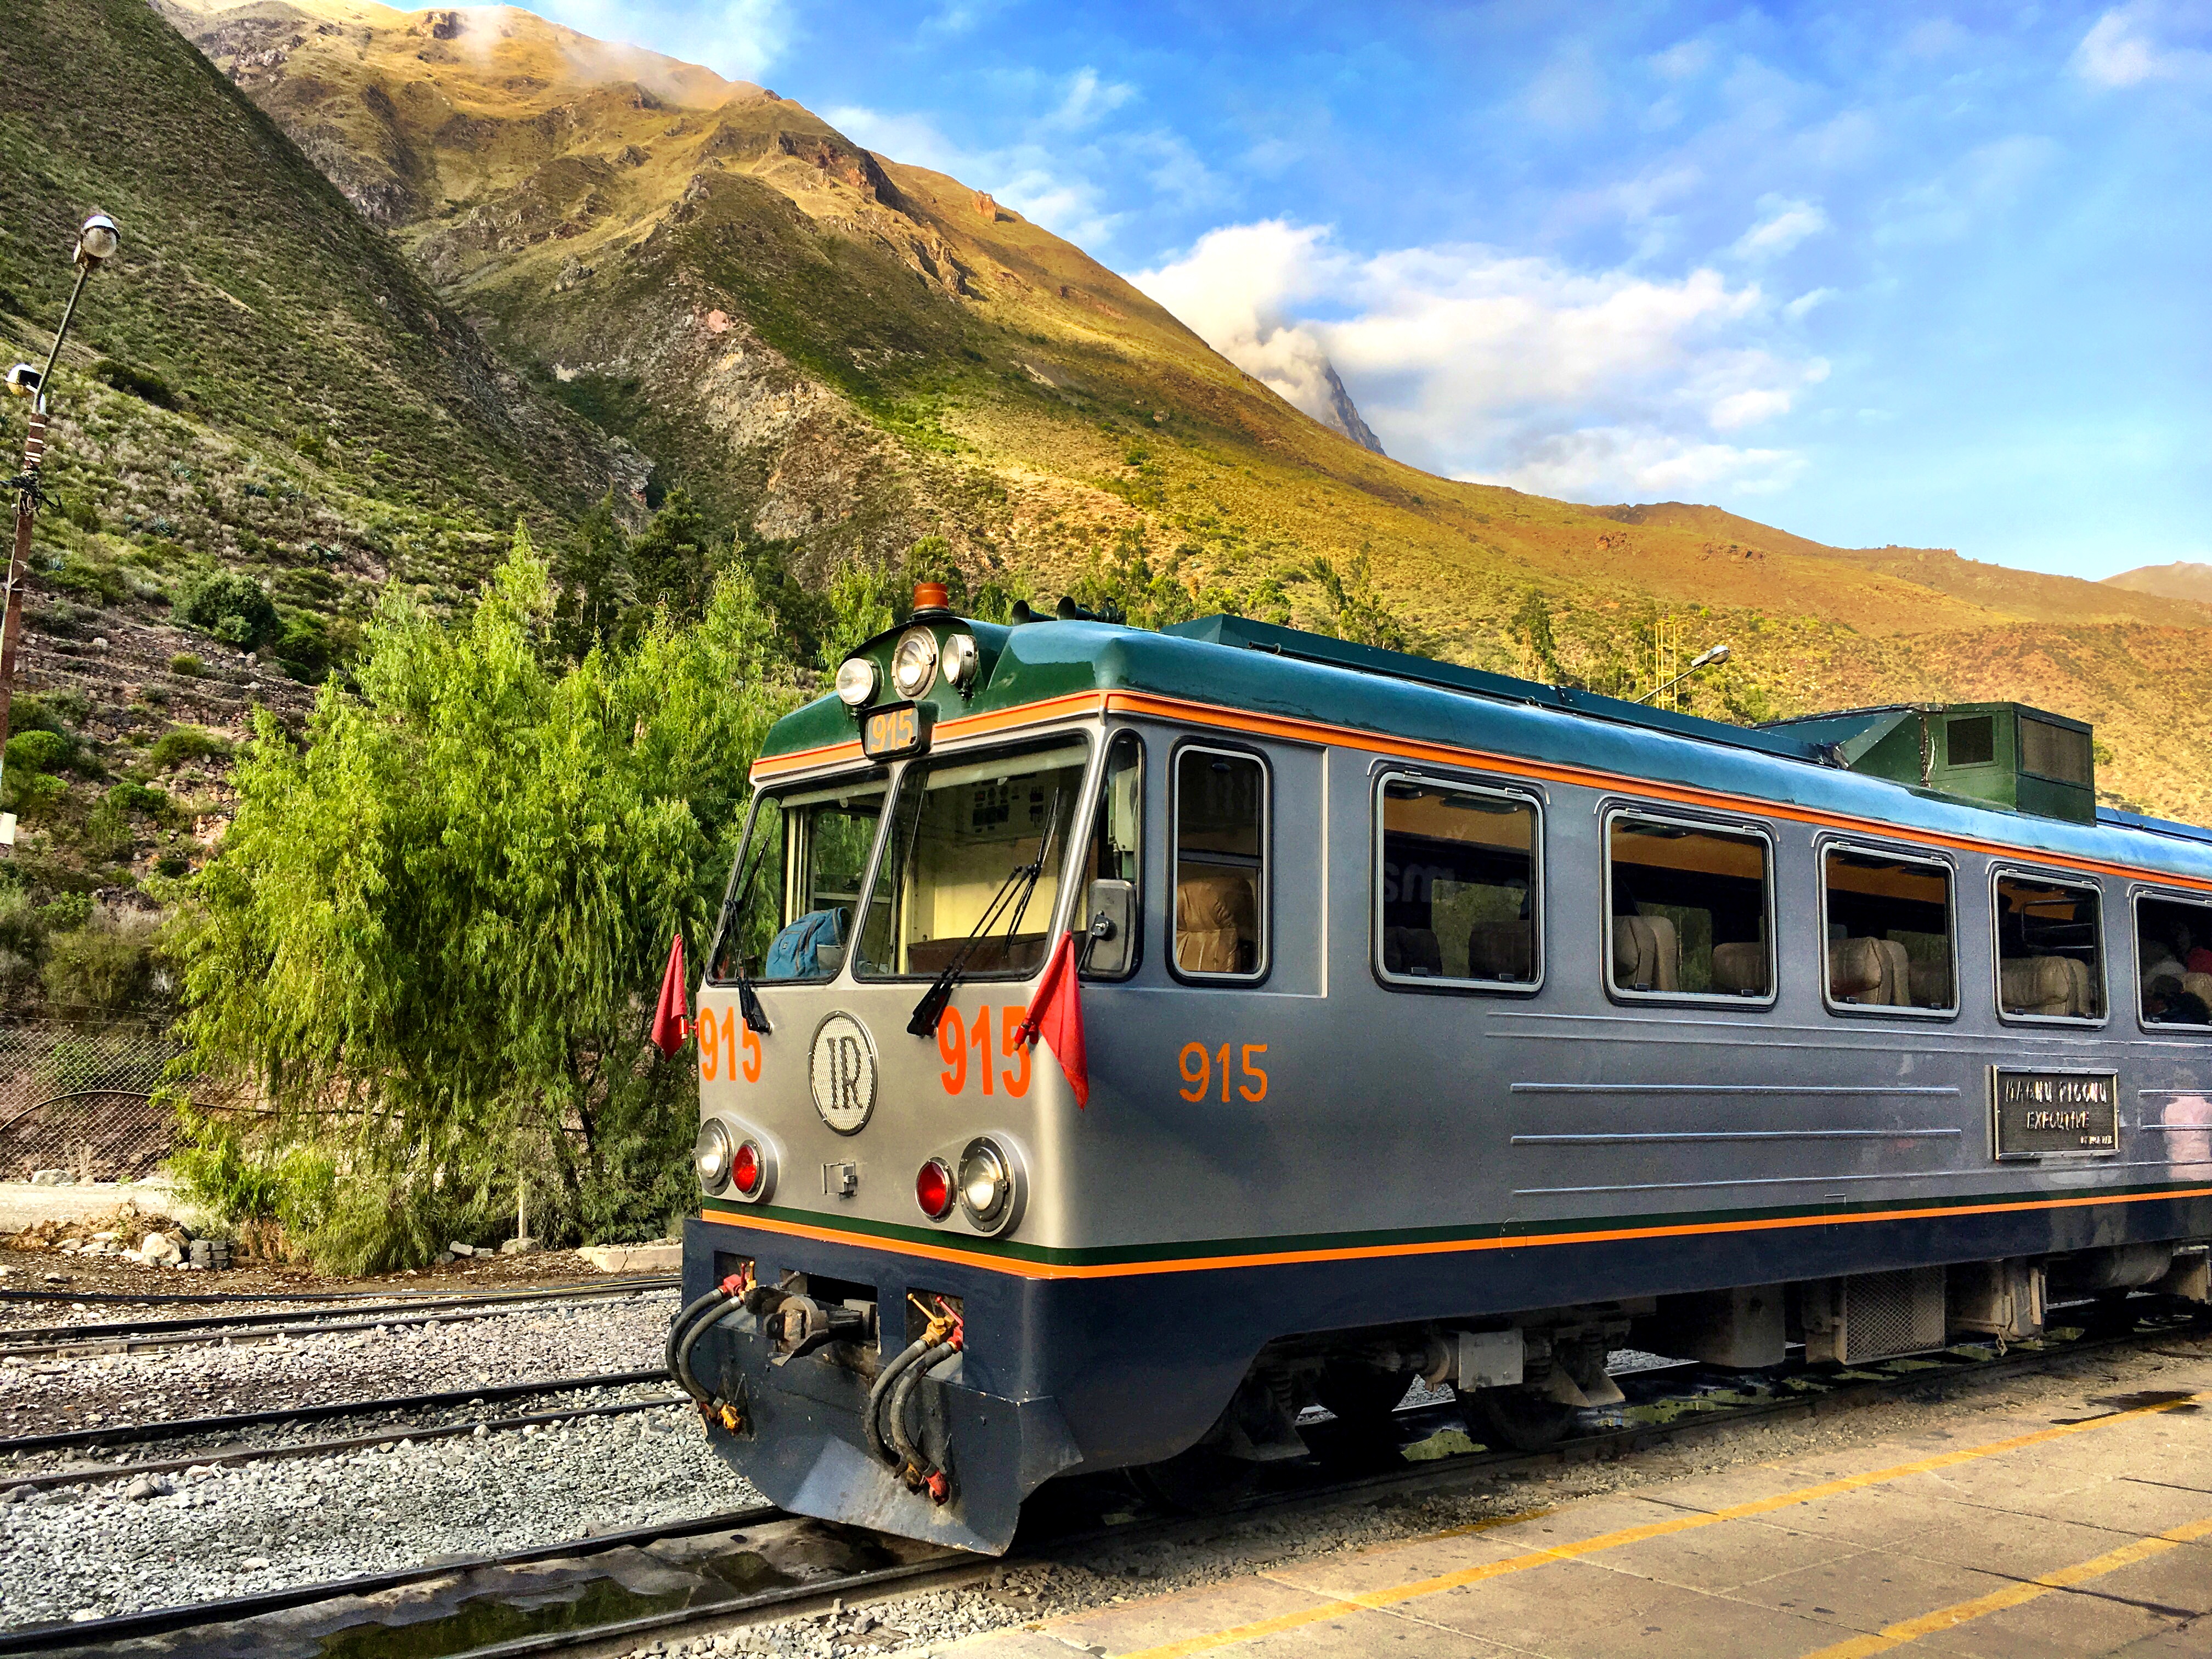 Take the Machu Picchu Executive Train to Machu Picchu